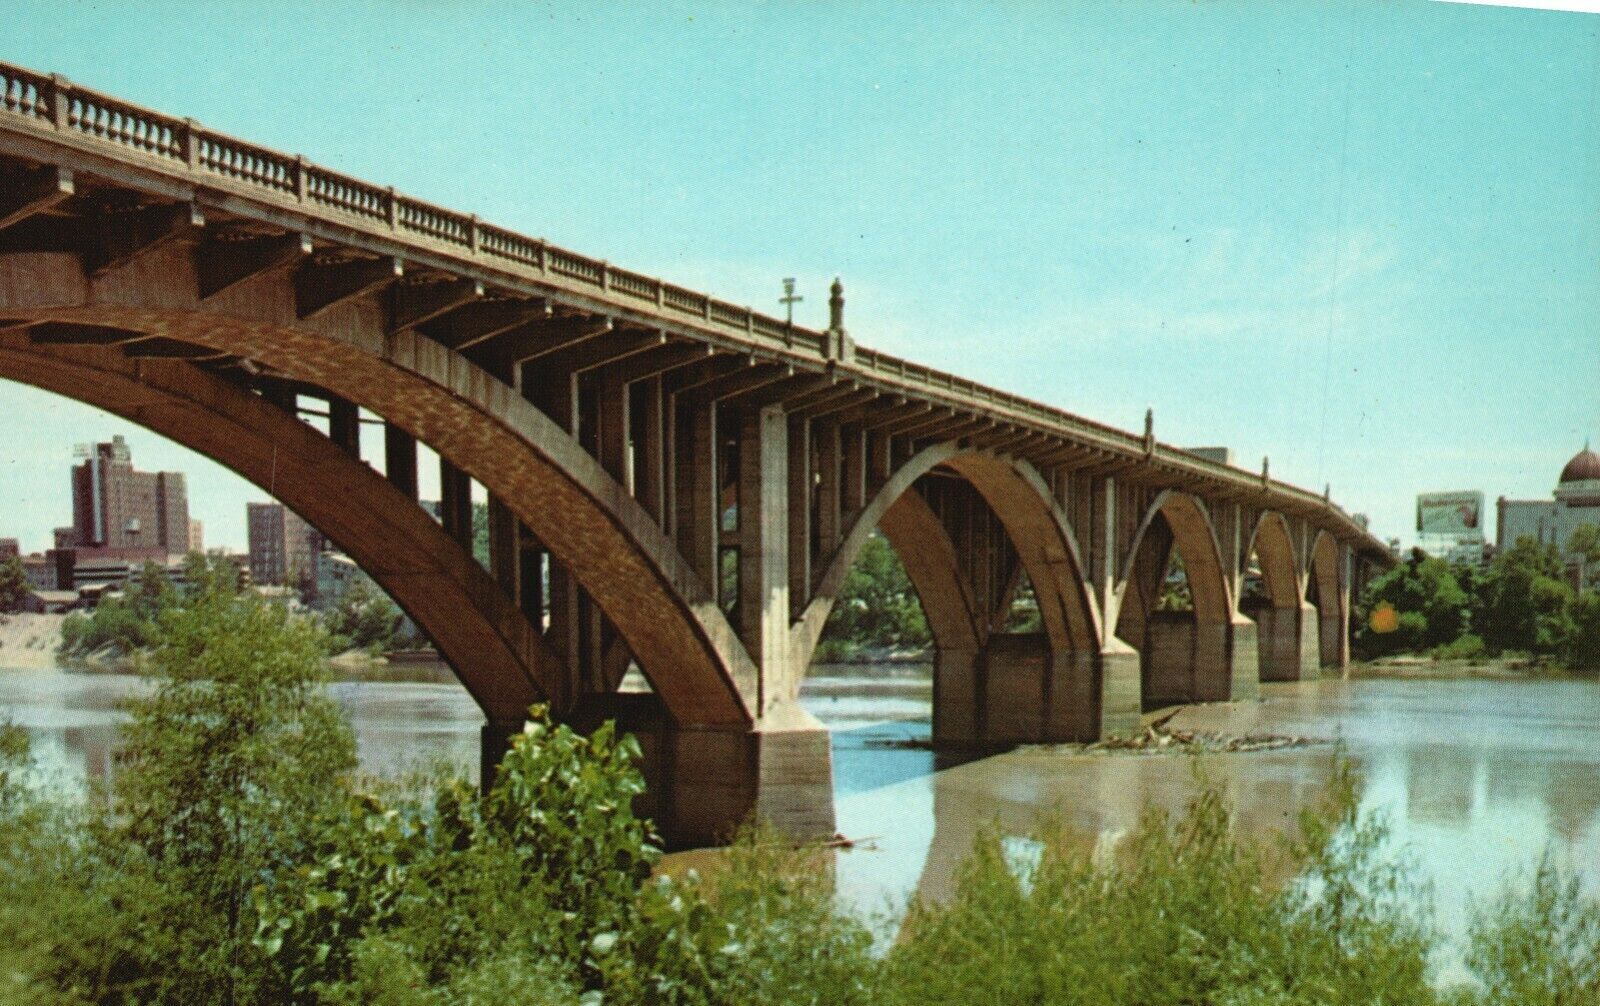 Vintage Postcard Broadway Bridge Arkansas River Little Rock Arkansas